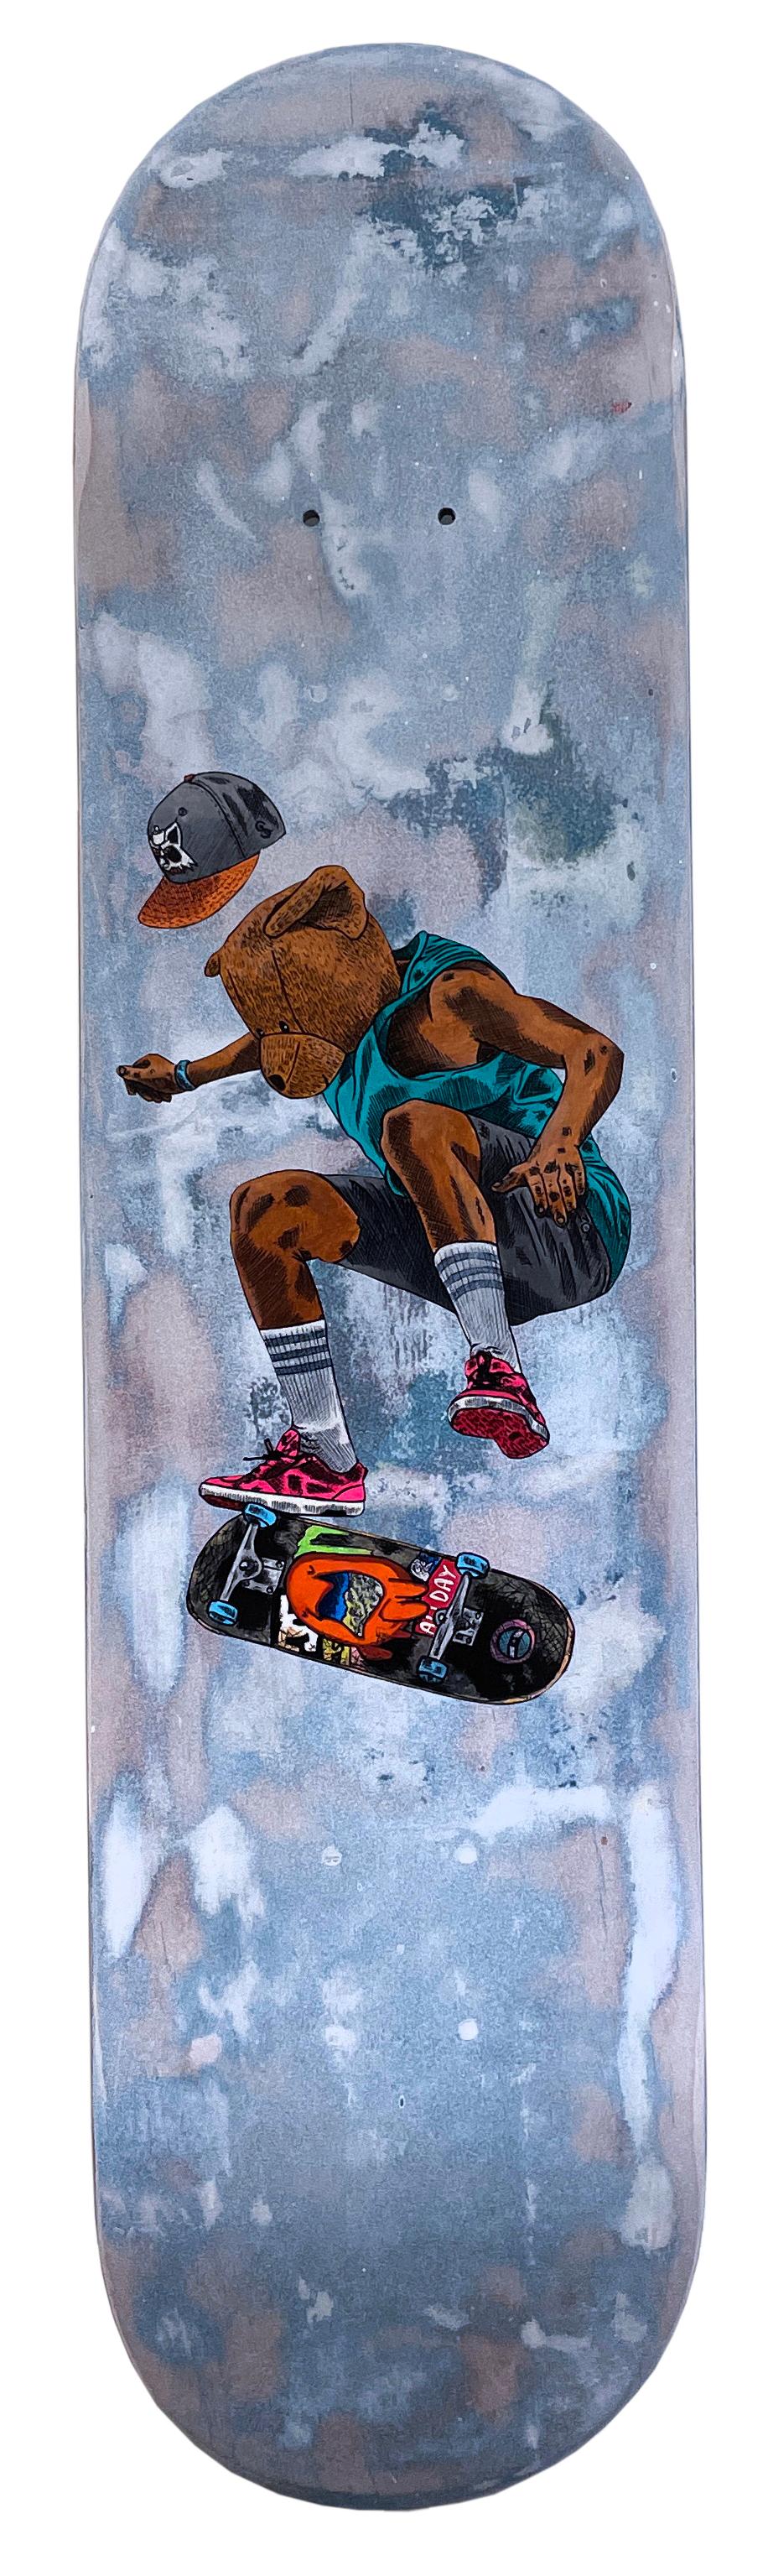 Sean 9 Lugo Figurative Painting - Laser Flip, 2020, graffiti urban mixed media wheatpaste skateboard bear, skater